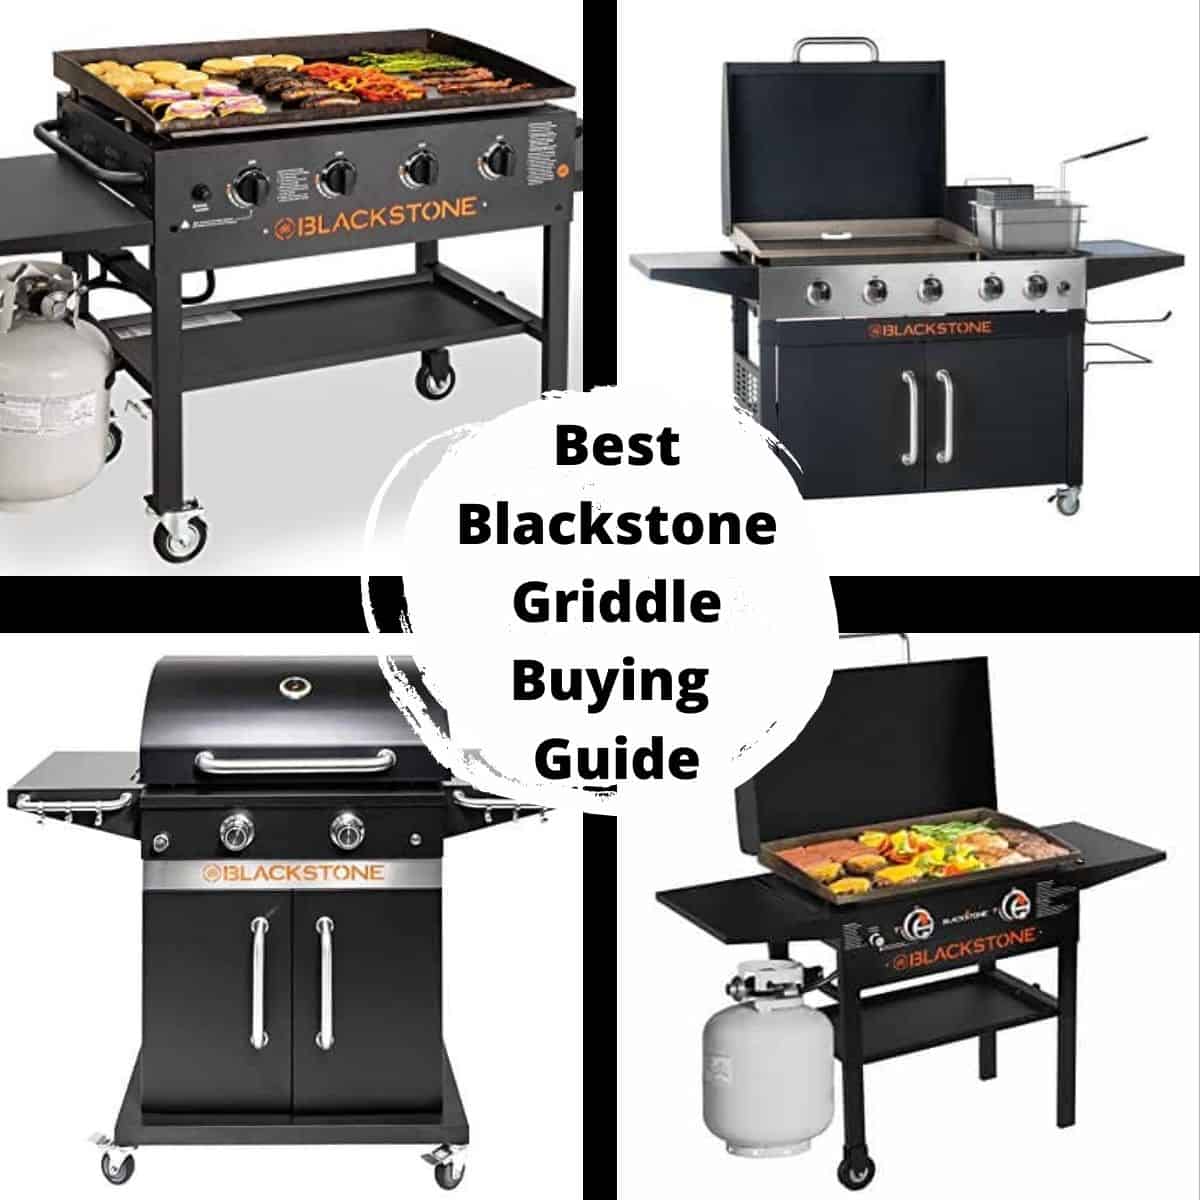 Best Blackstone Griddle Buying Guide - 4 different models of griddles